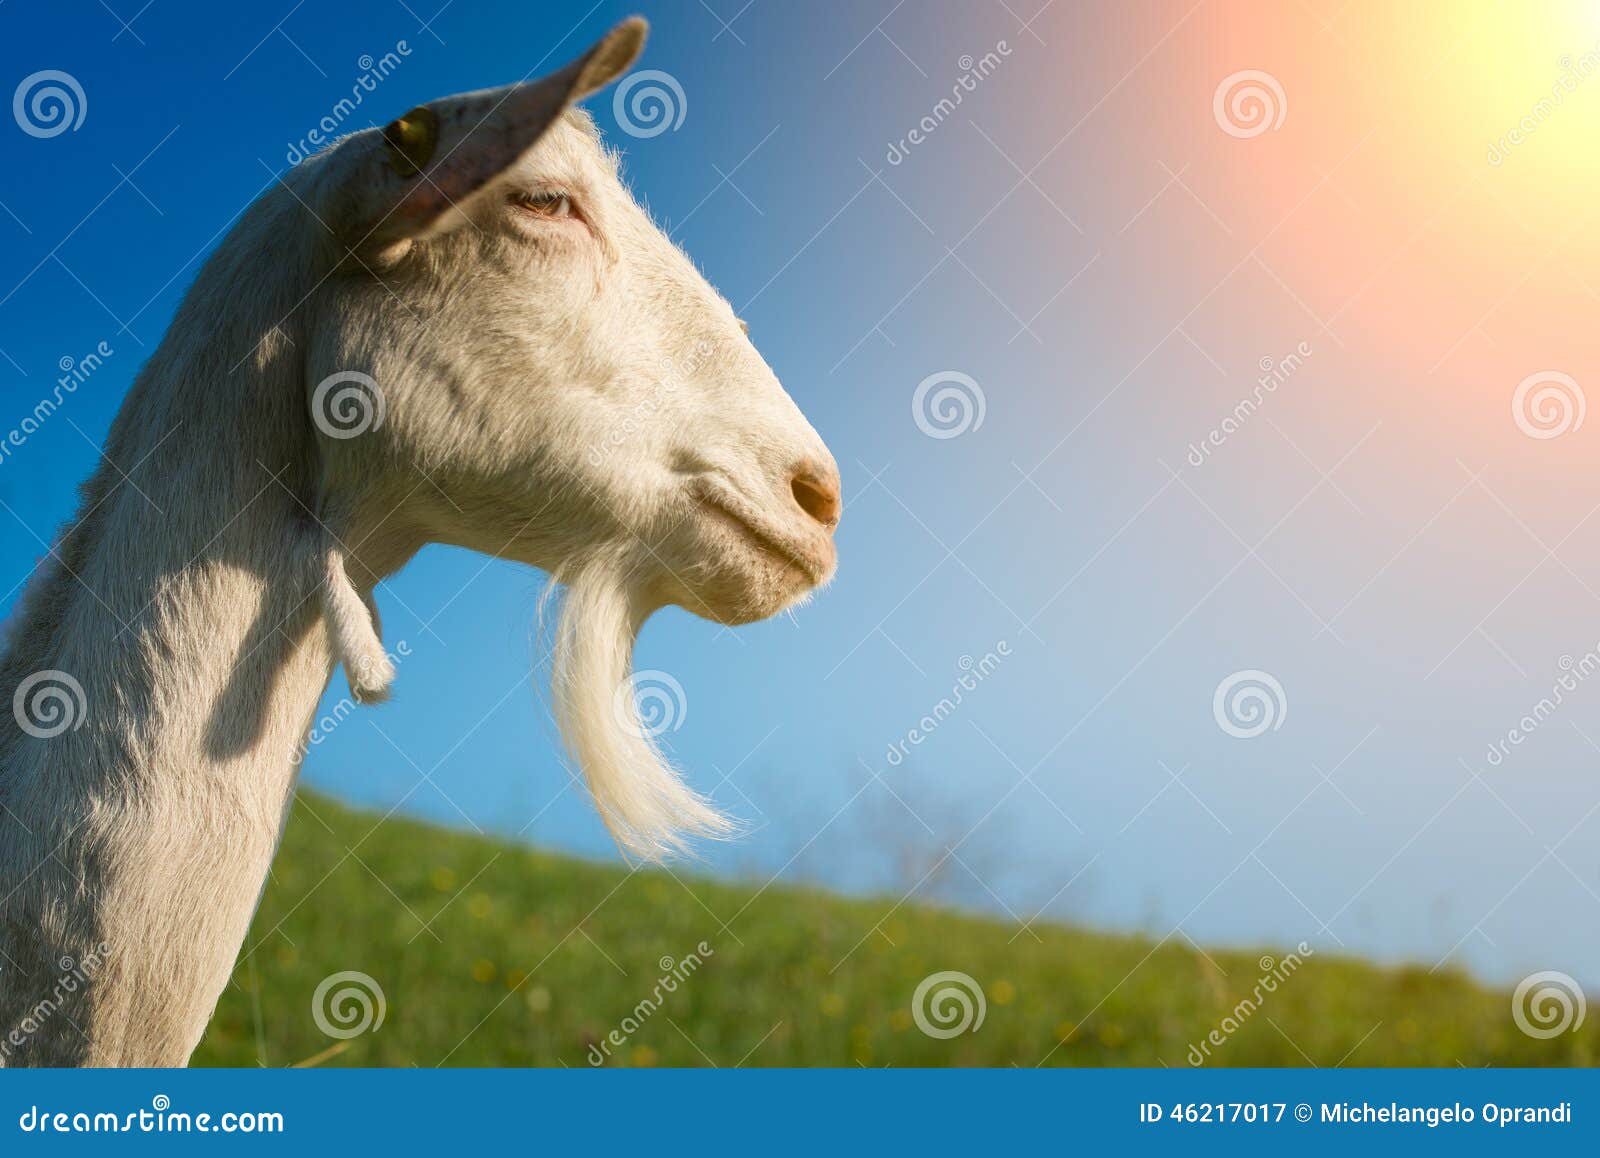 6,809 Goat Beard Stock Photos - Free & Royalty-Free Stock Photos from  Dreamstime